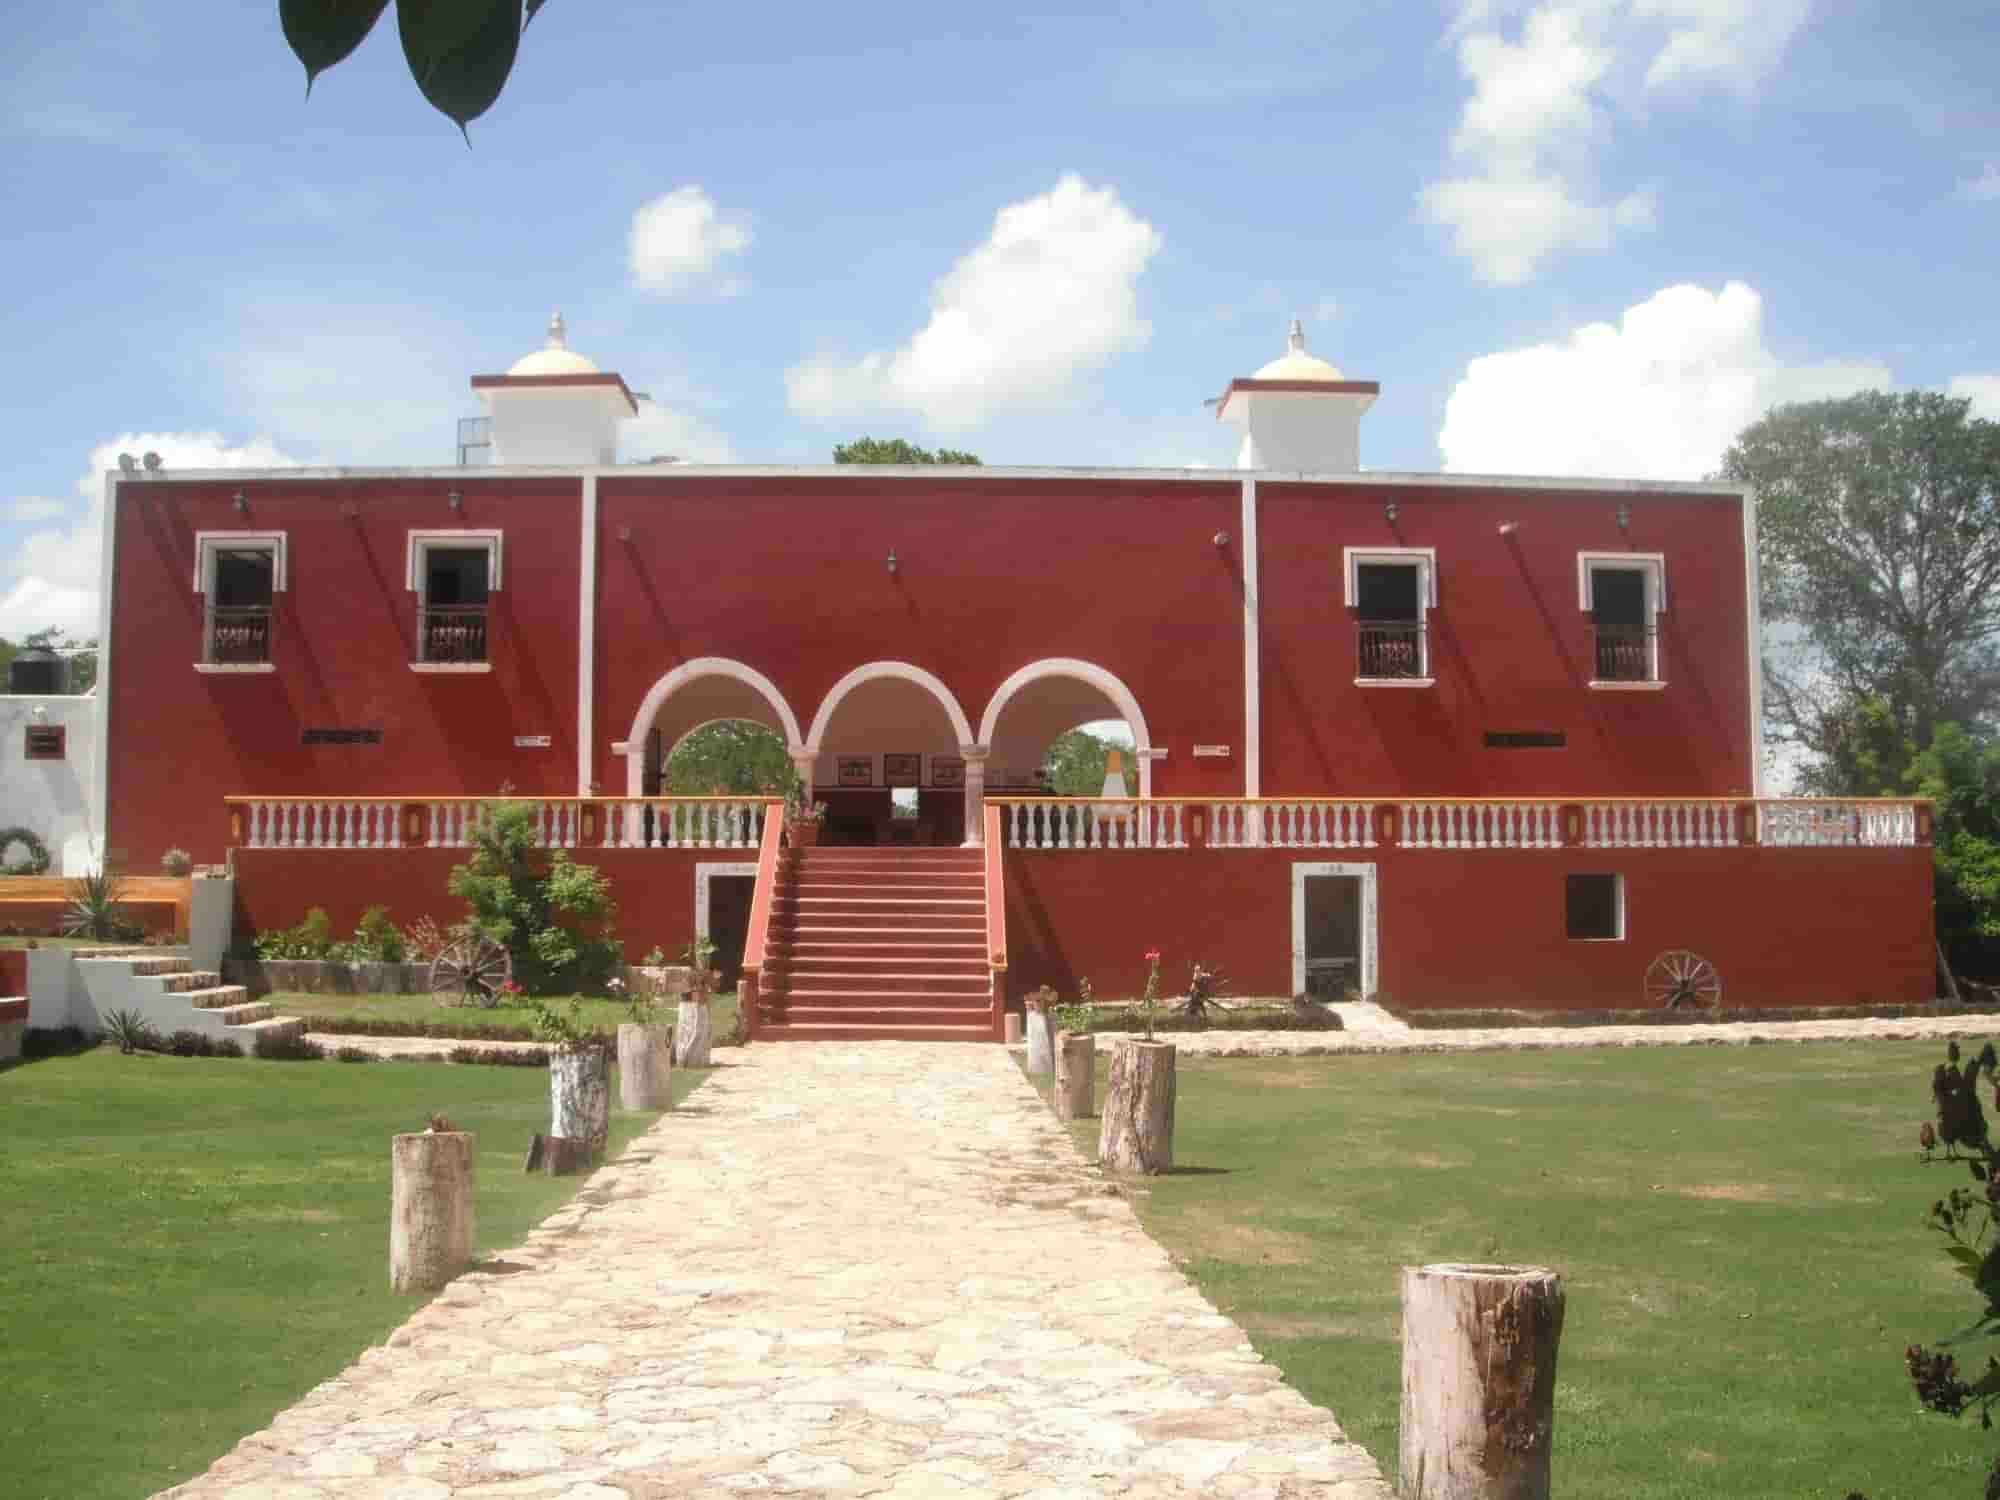 Hacienda San Lorenzo Oxman